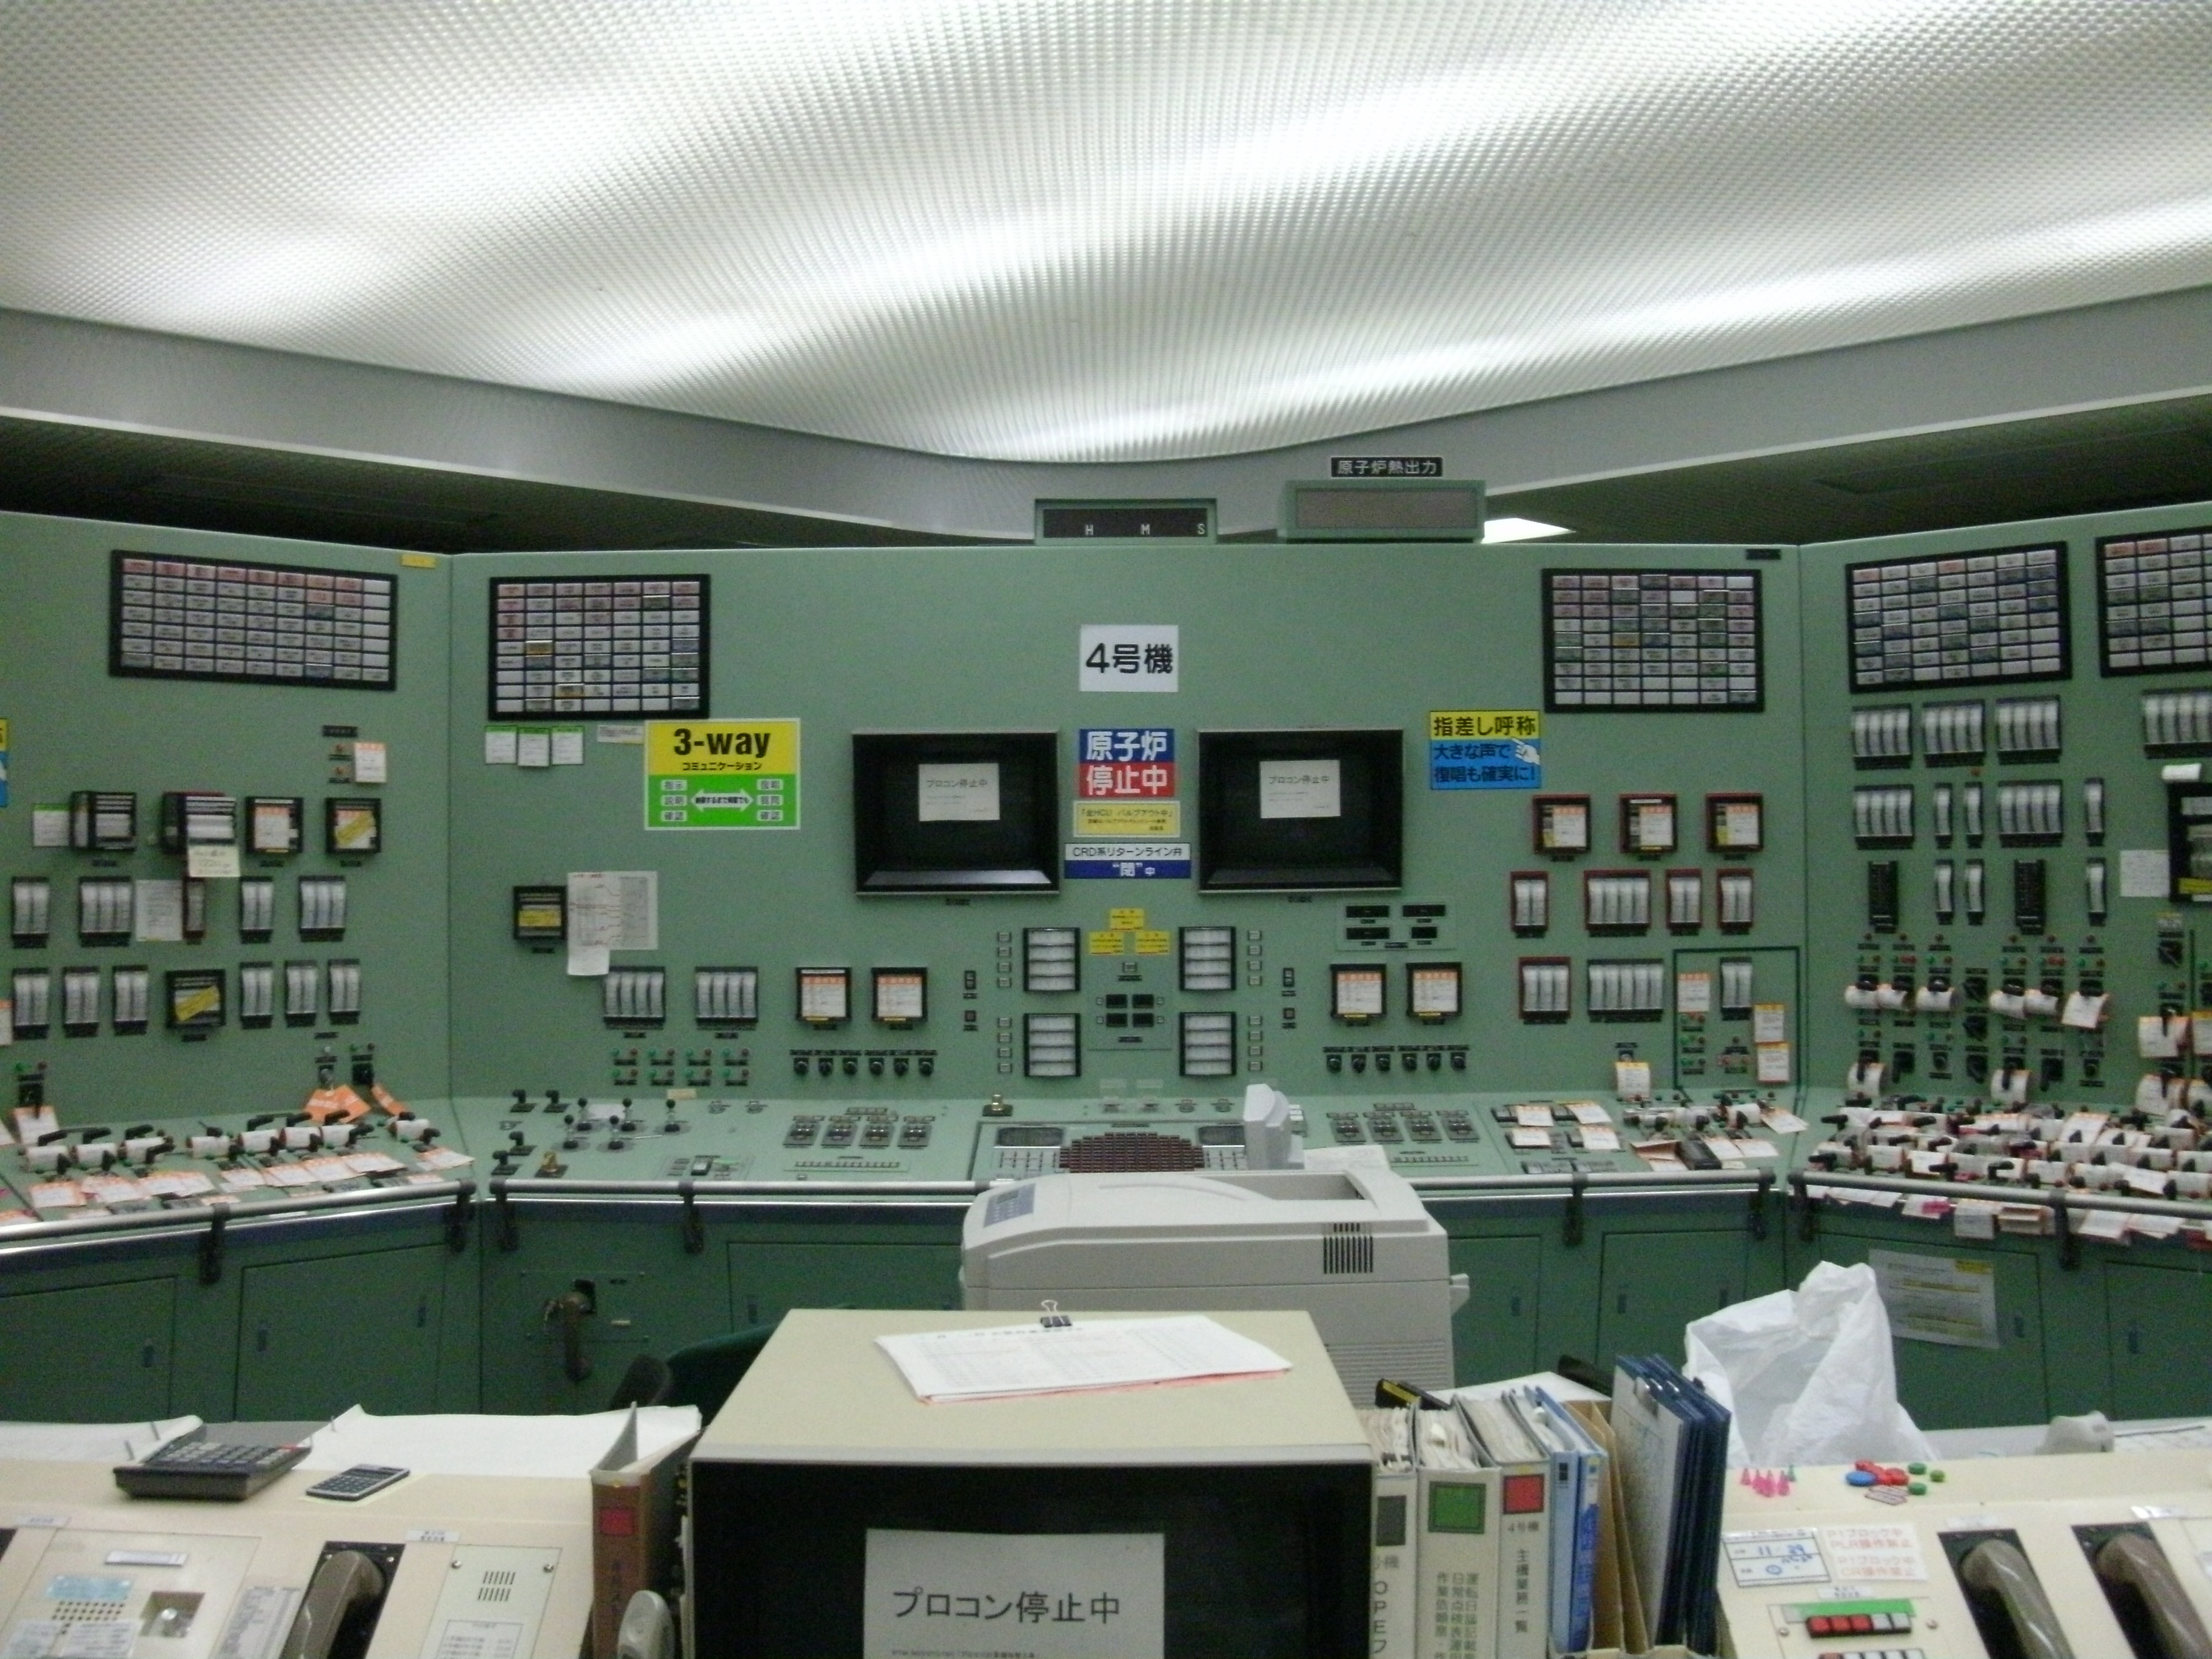 Control room for Unit 4 of Fukushima Daiichi Nuclear Power Station